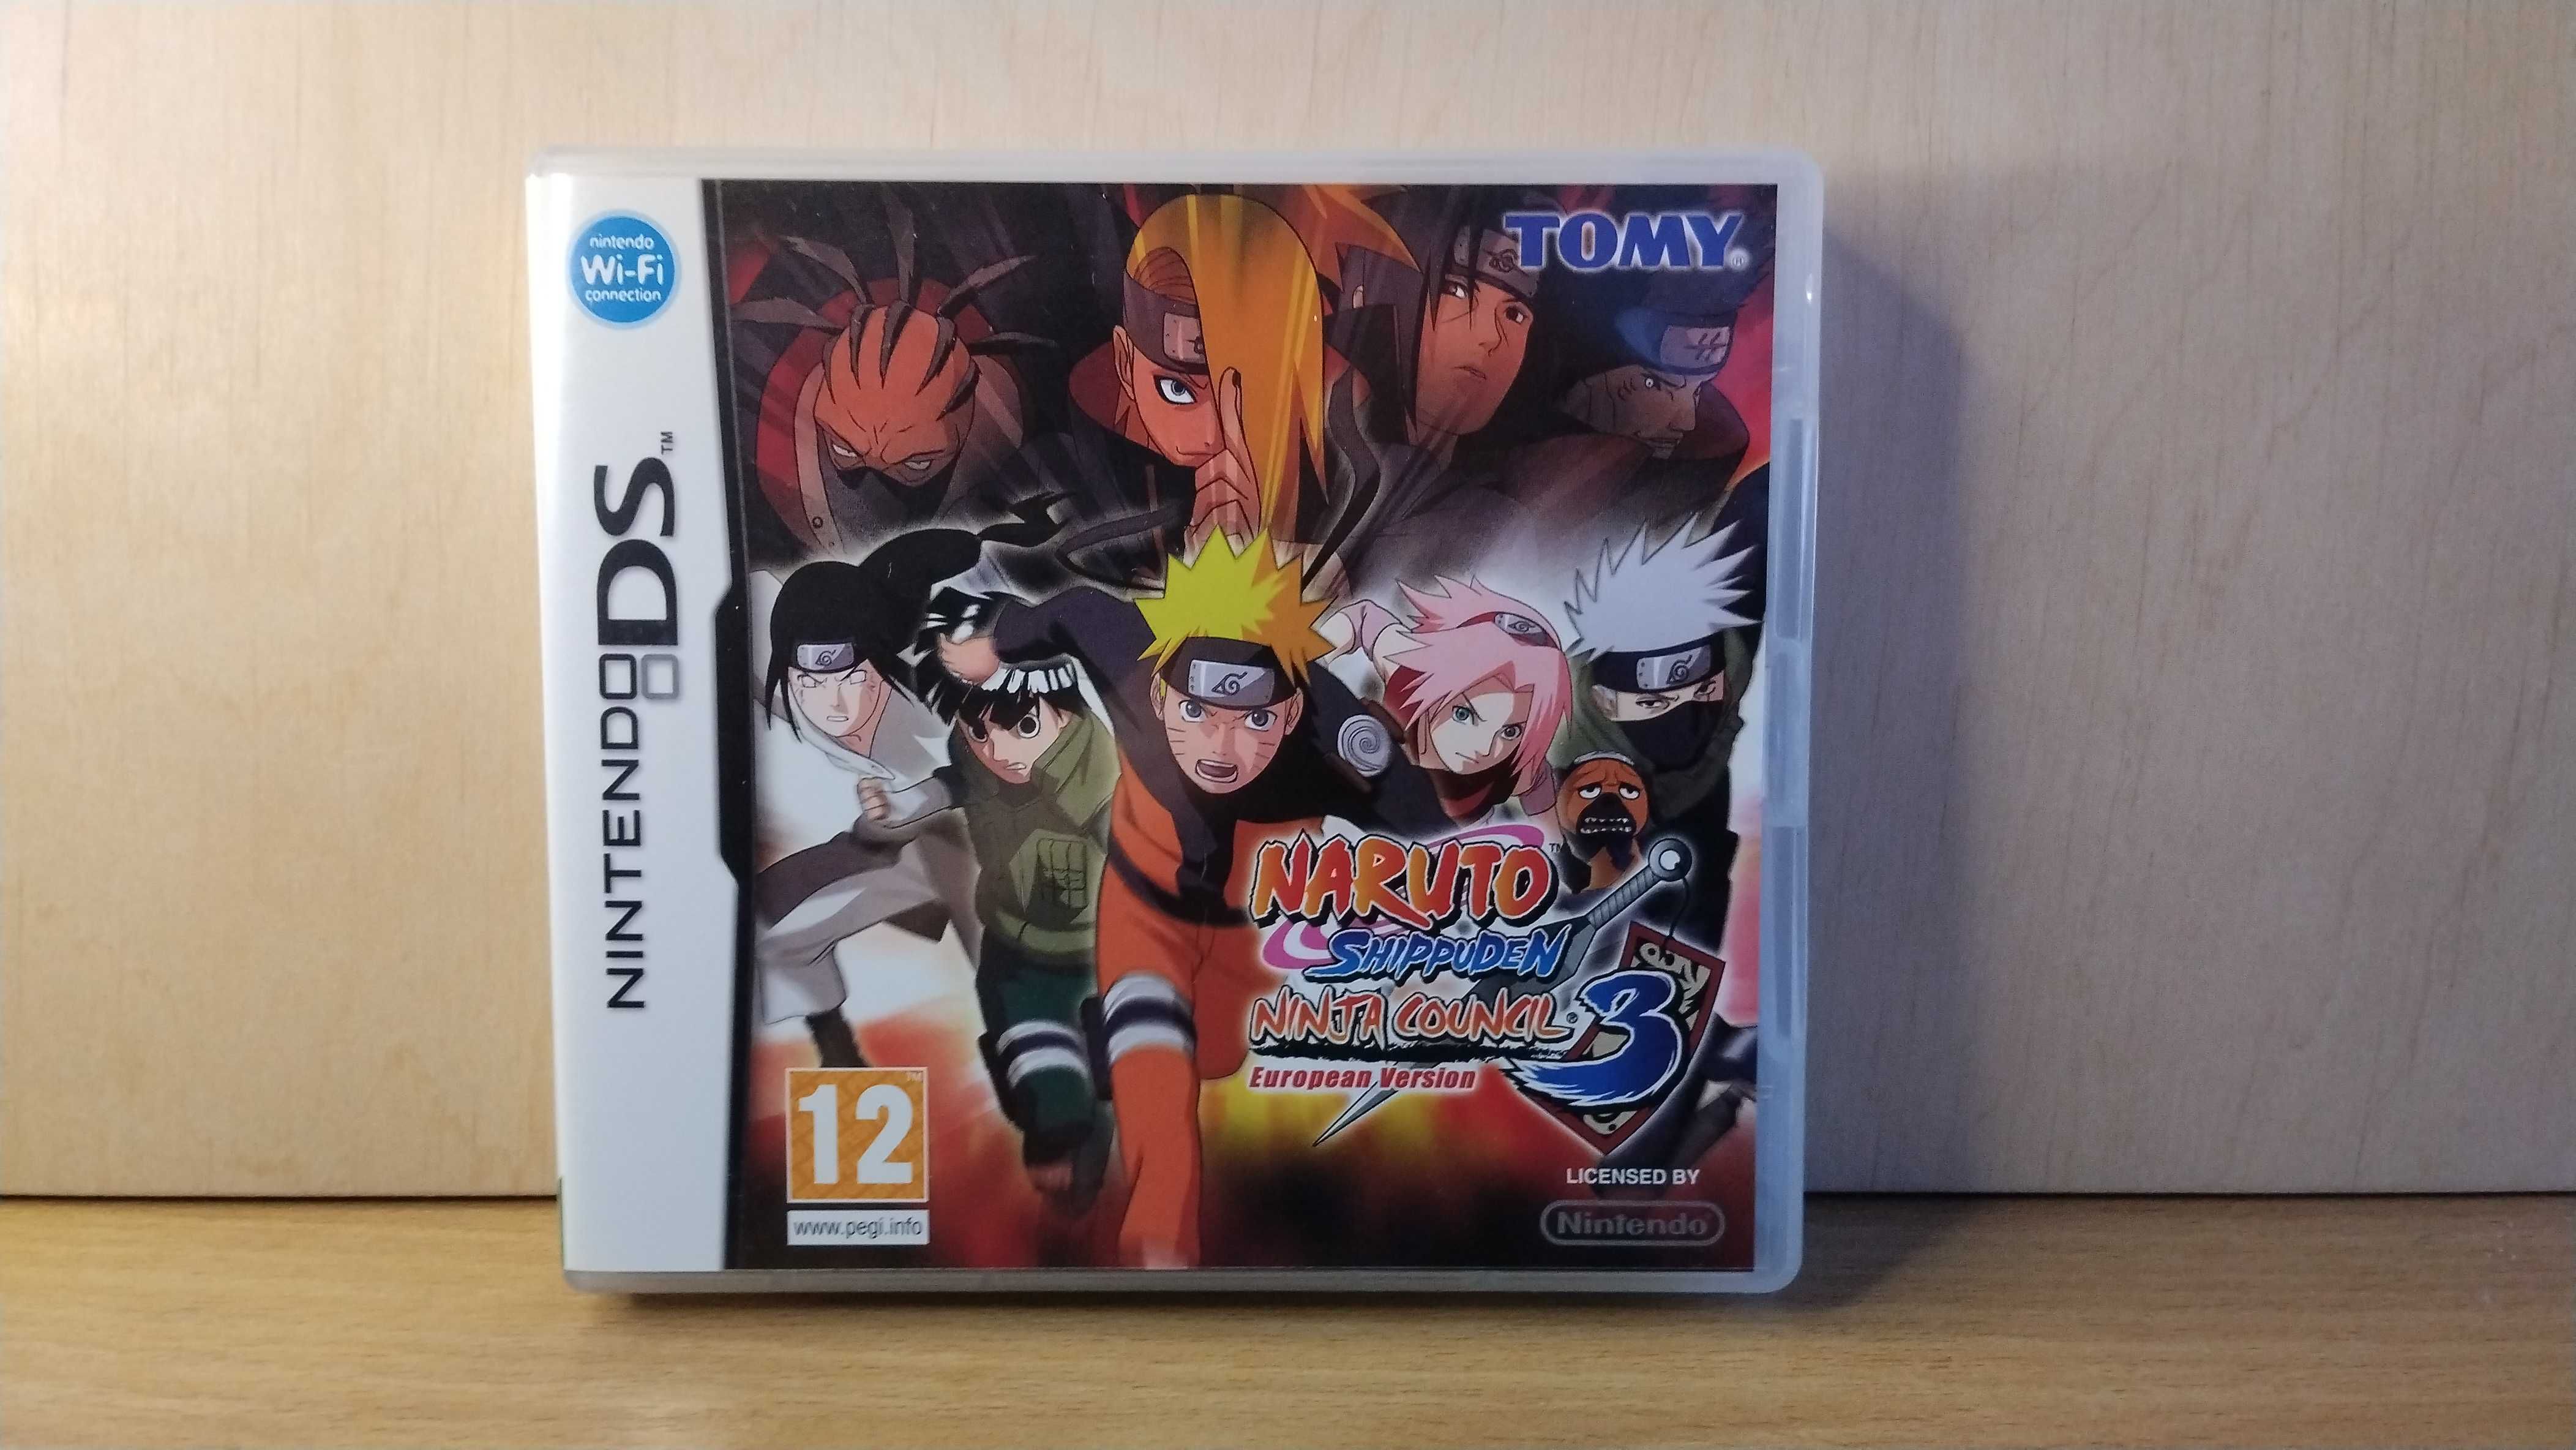 Naruto Shippuden Ninja Council 3 European Version - Nintendo DS.